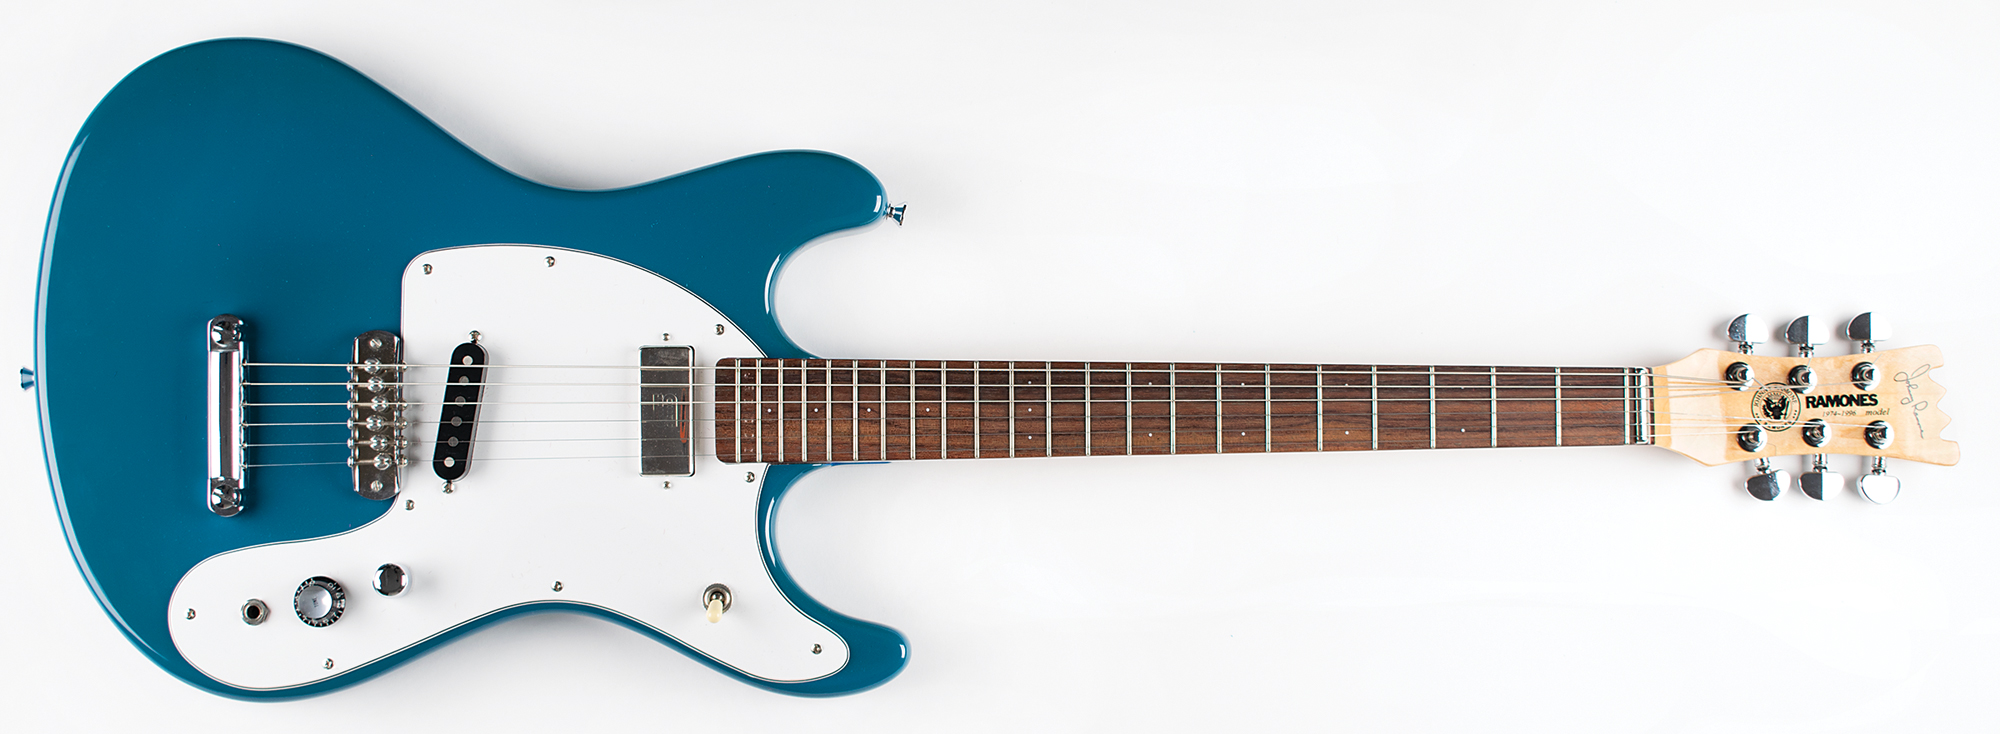 Lot #9013 Johnny Ramone's Mark-2 (JRB000) Signature Model Guitar